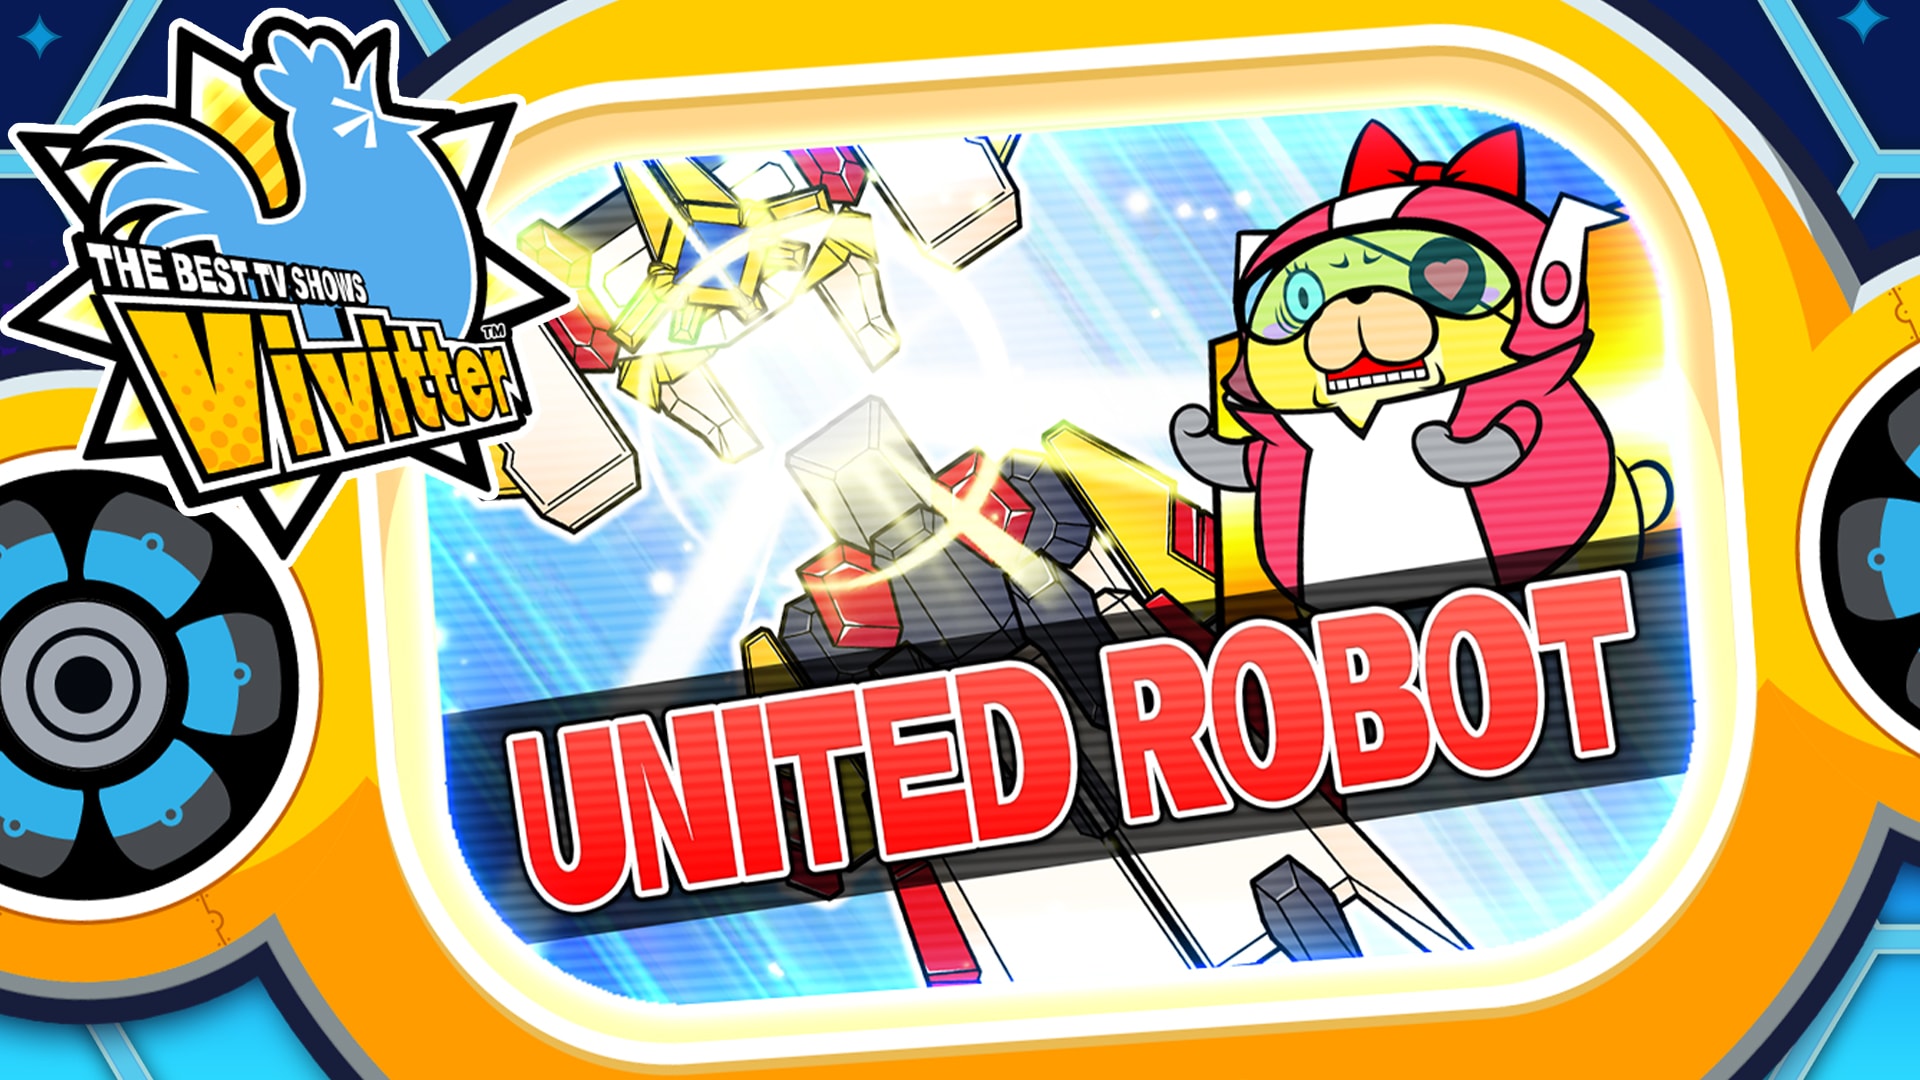 Additional mini-game "UNITED ROBOT"